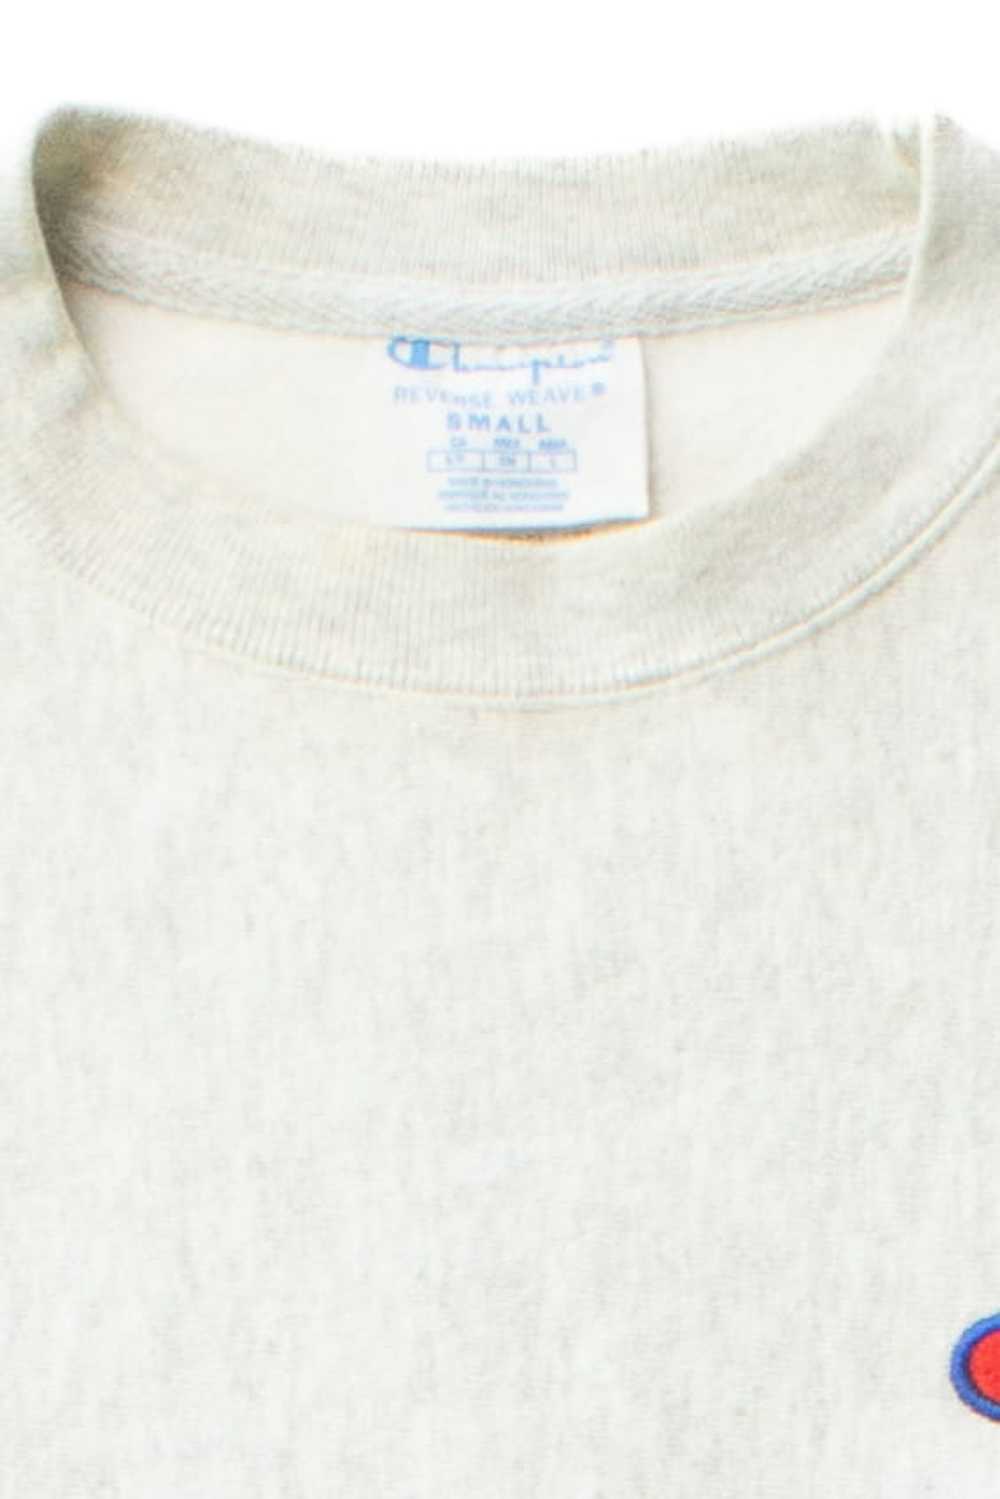 Gray Champion Sweatshirt (1990s) - image 3